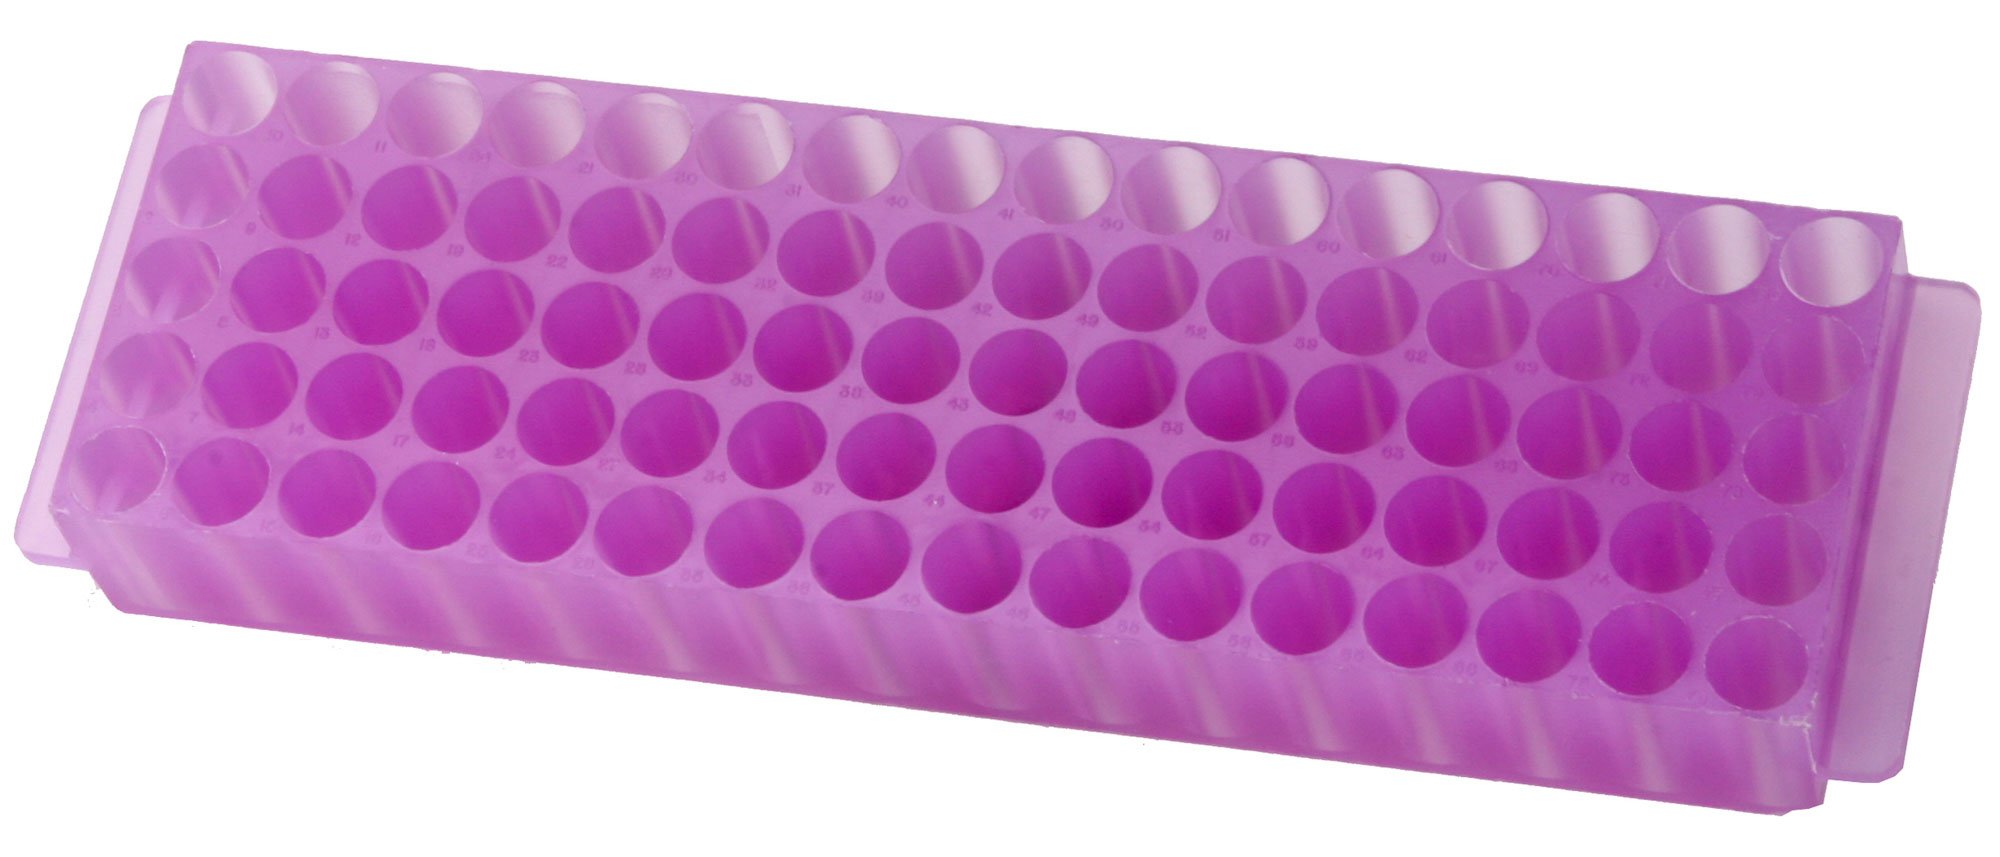 80-Well Microcentrifuge Tube Rack - Lavender